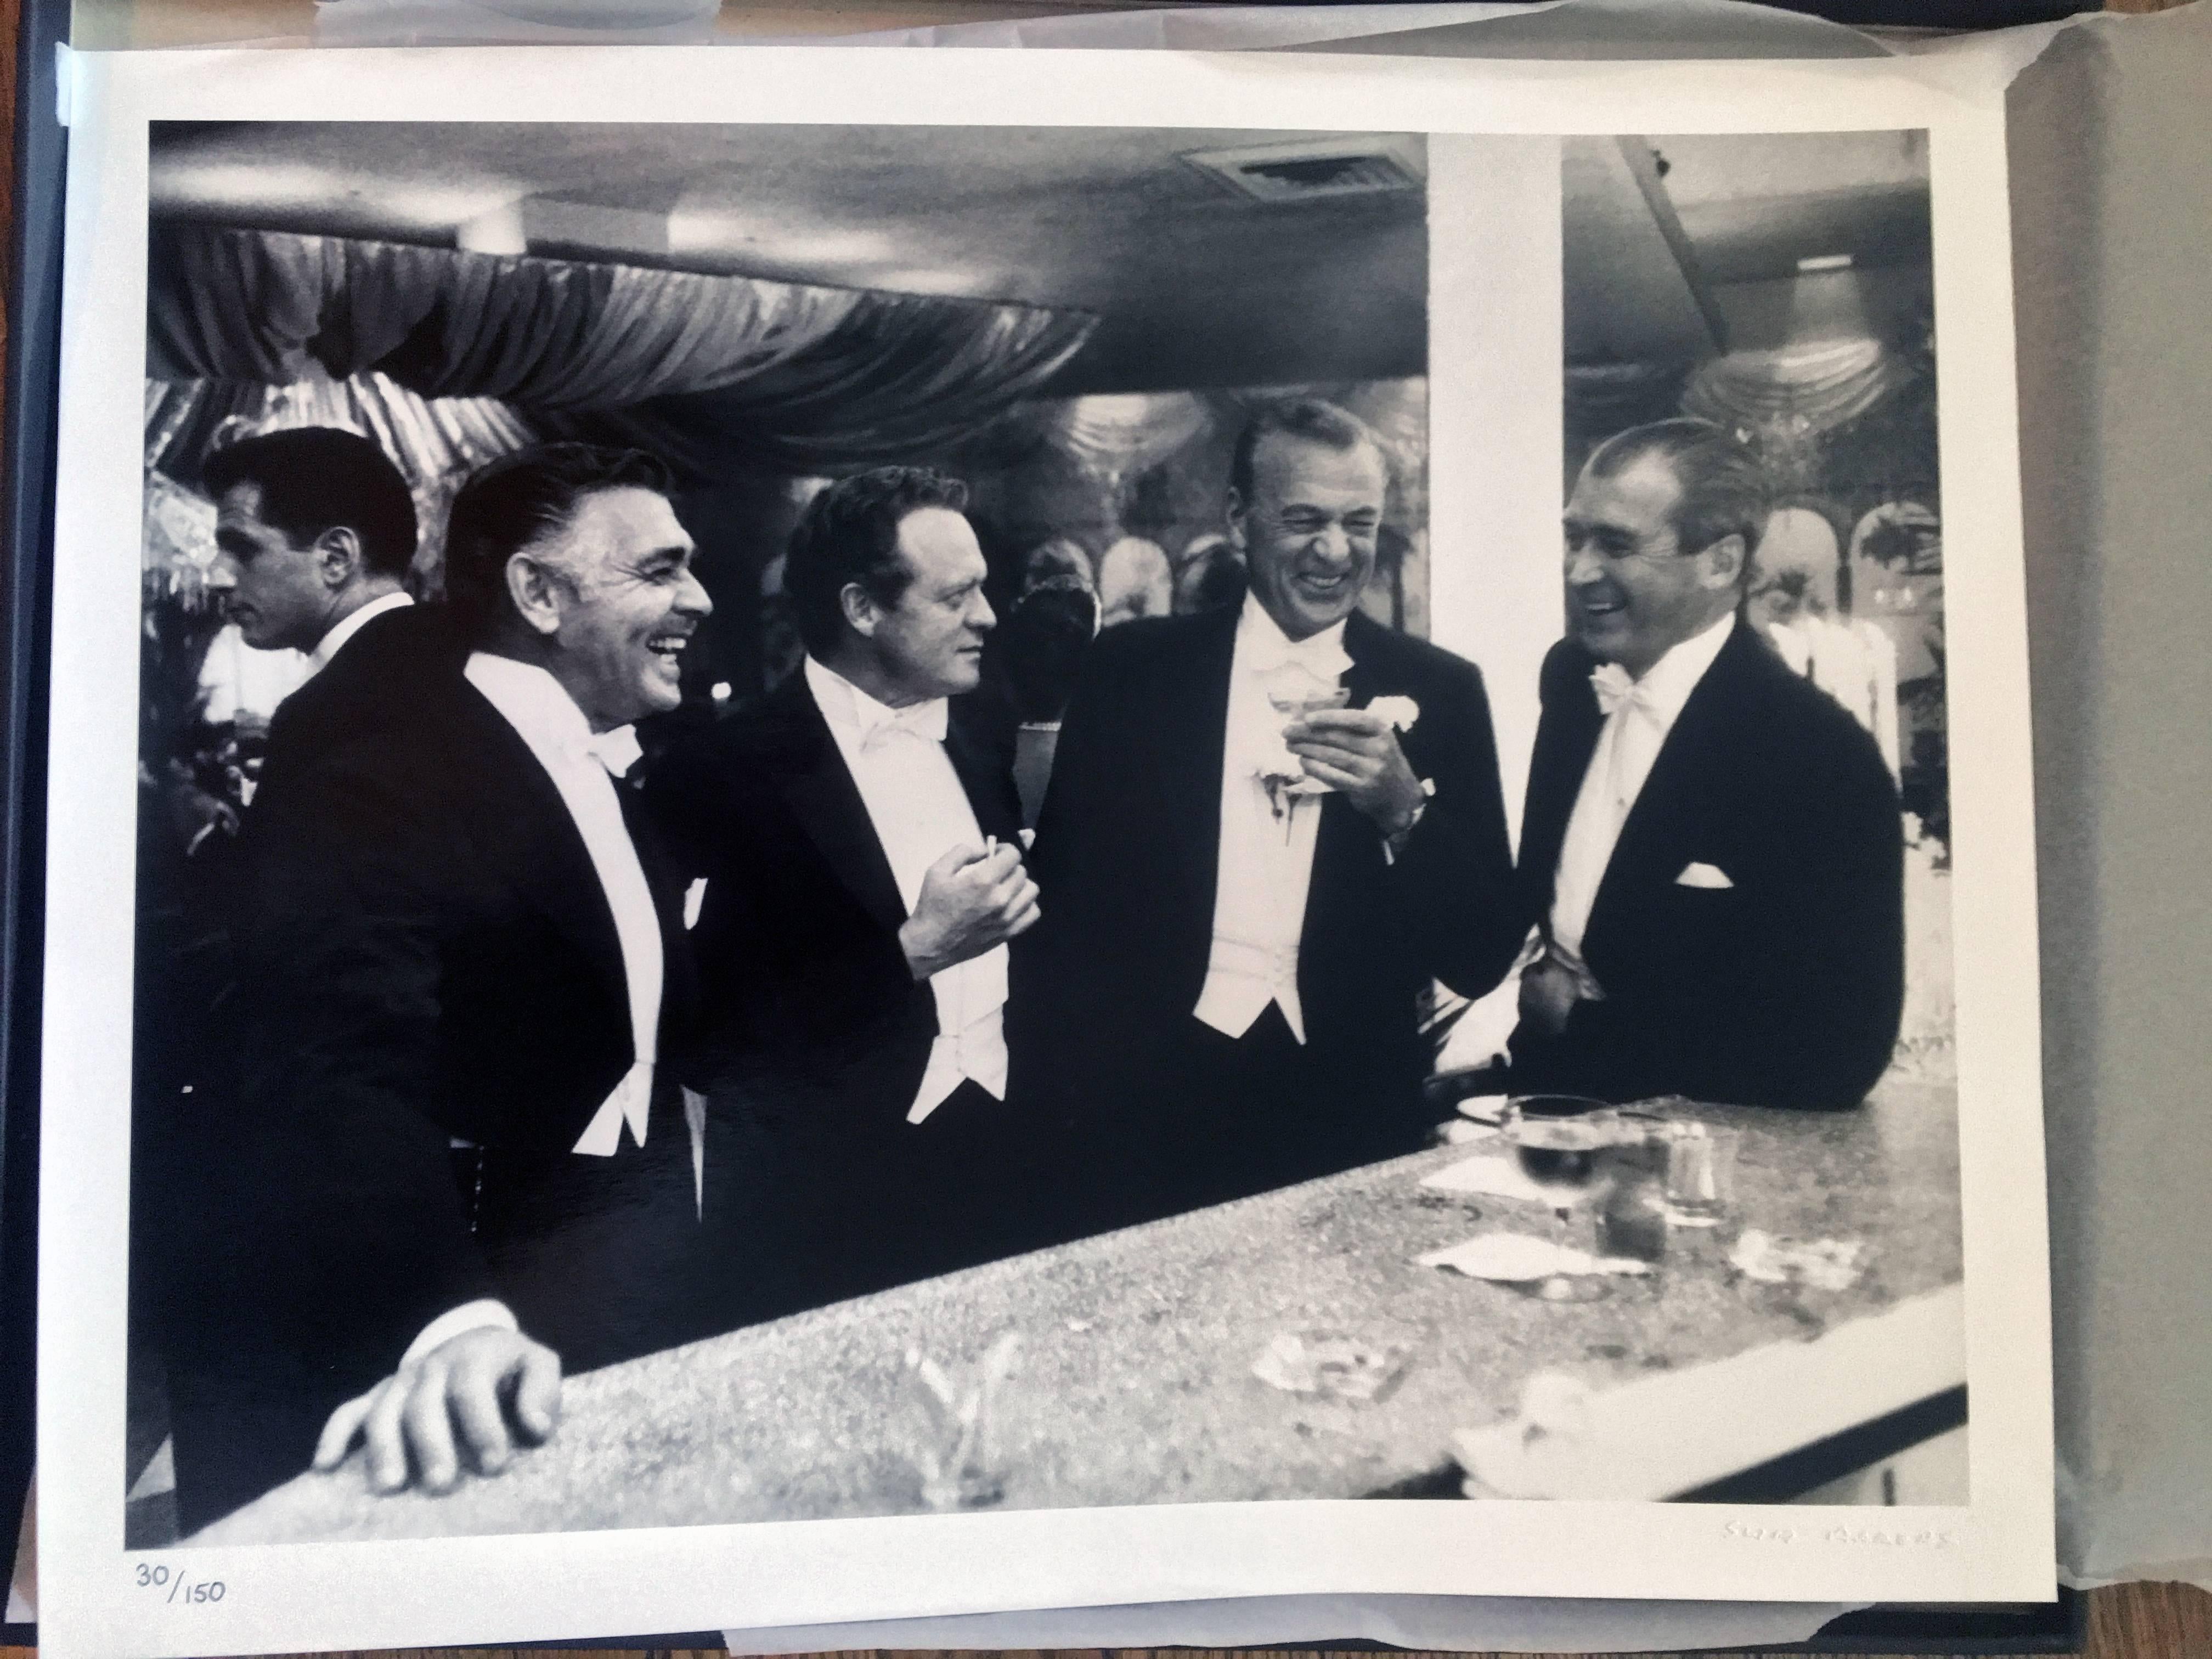 Kings of Hollywood (Clark Gable, Gary Cooper, James Stewart, Van Heflin) - Photograph de Slim Aarons